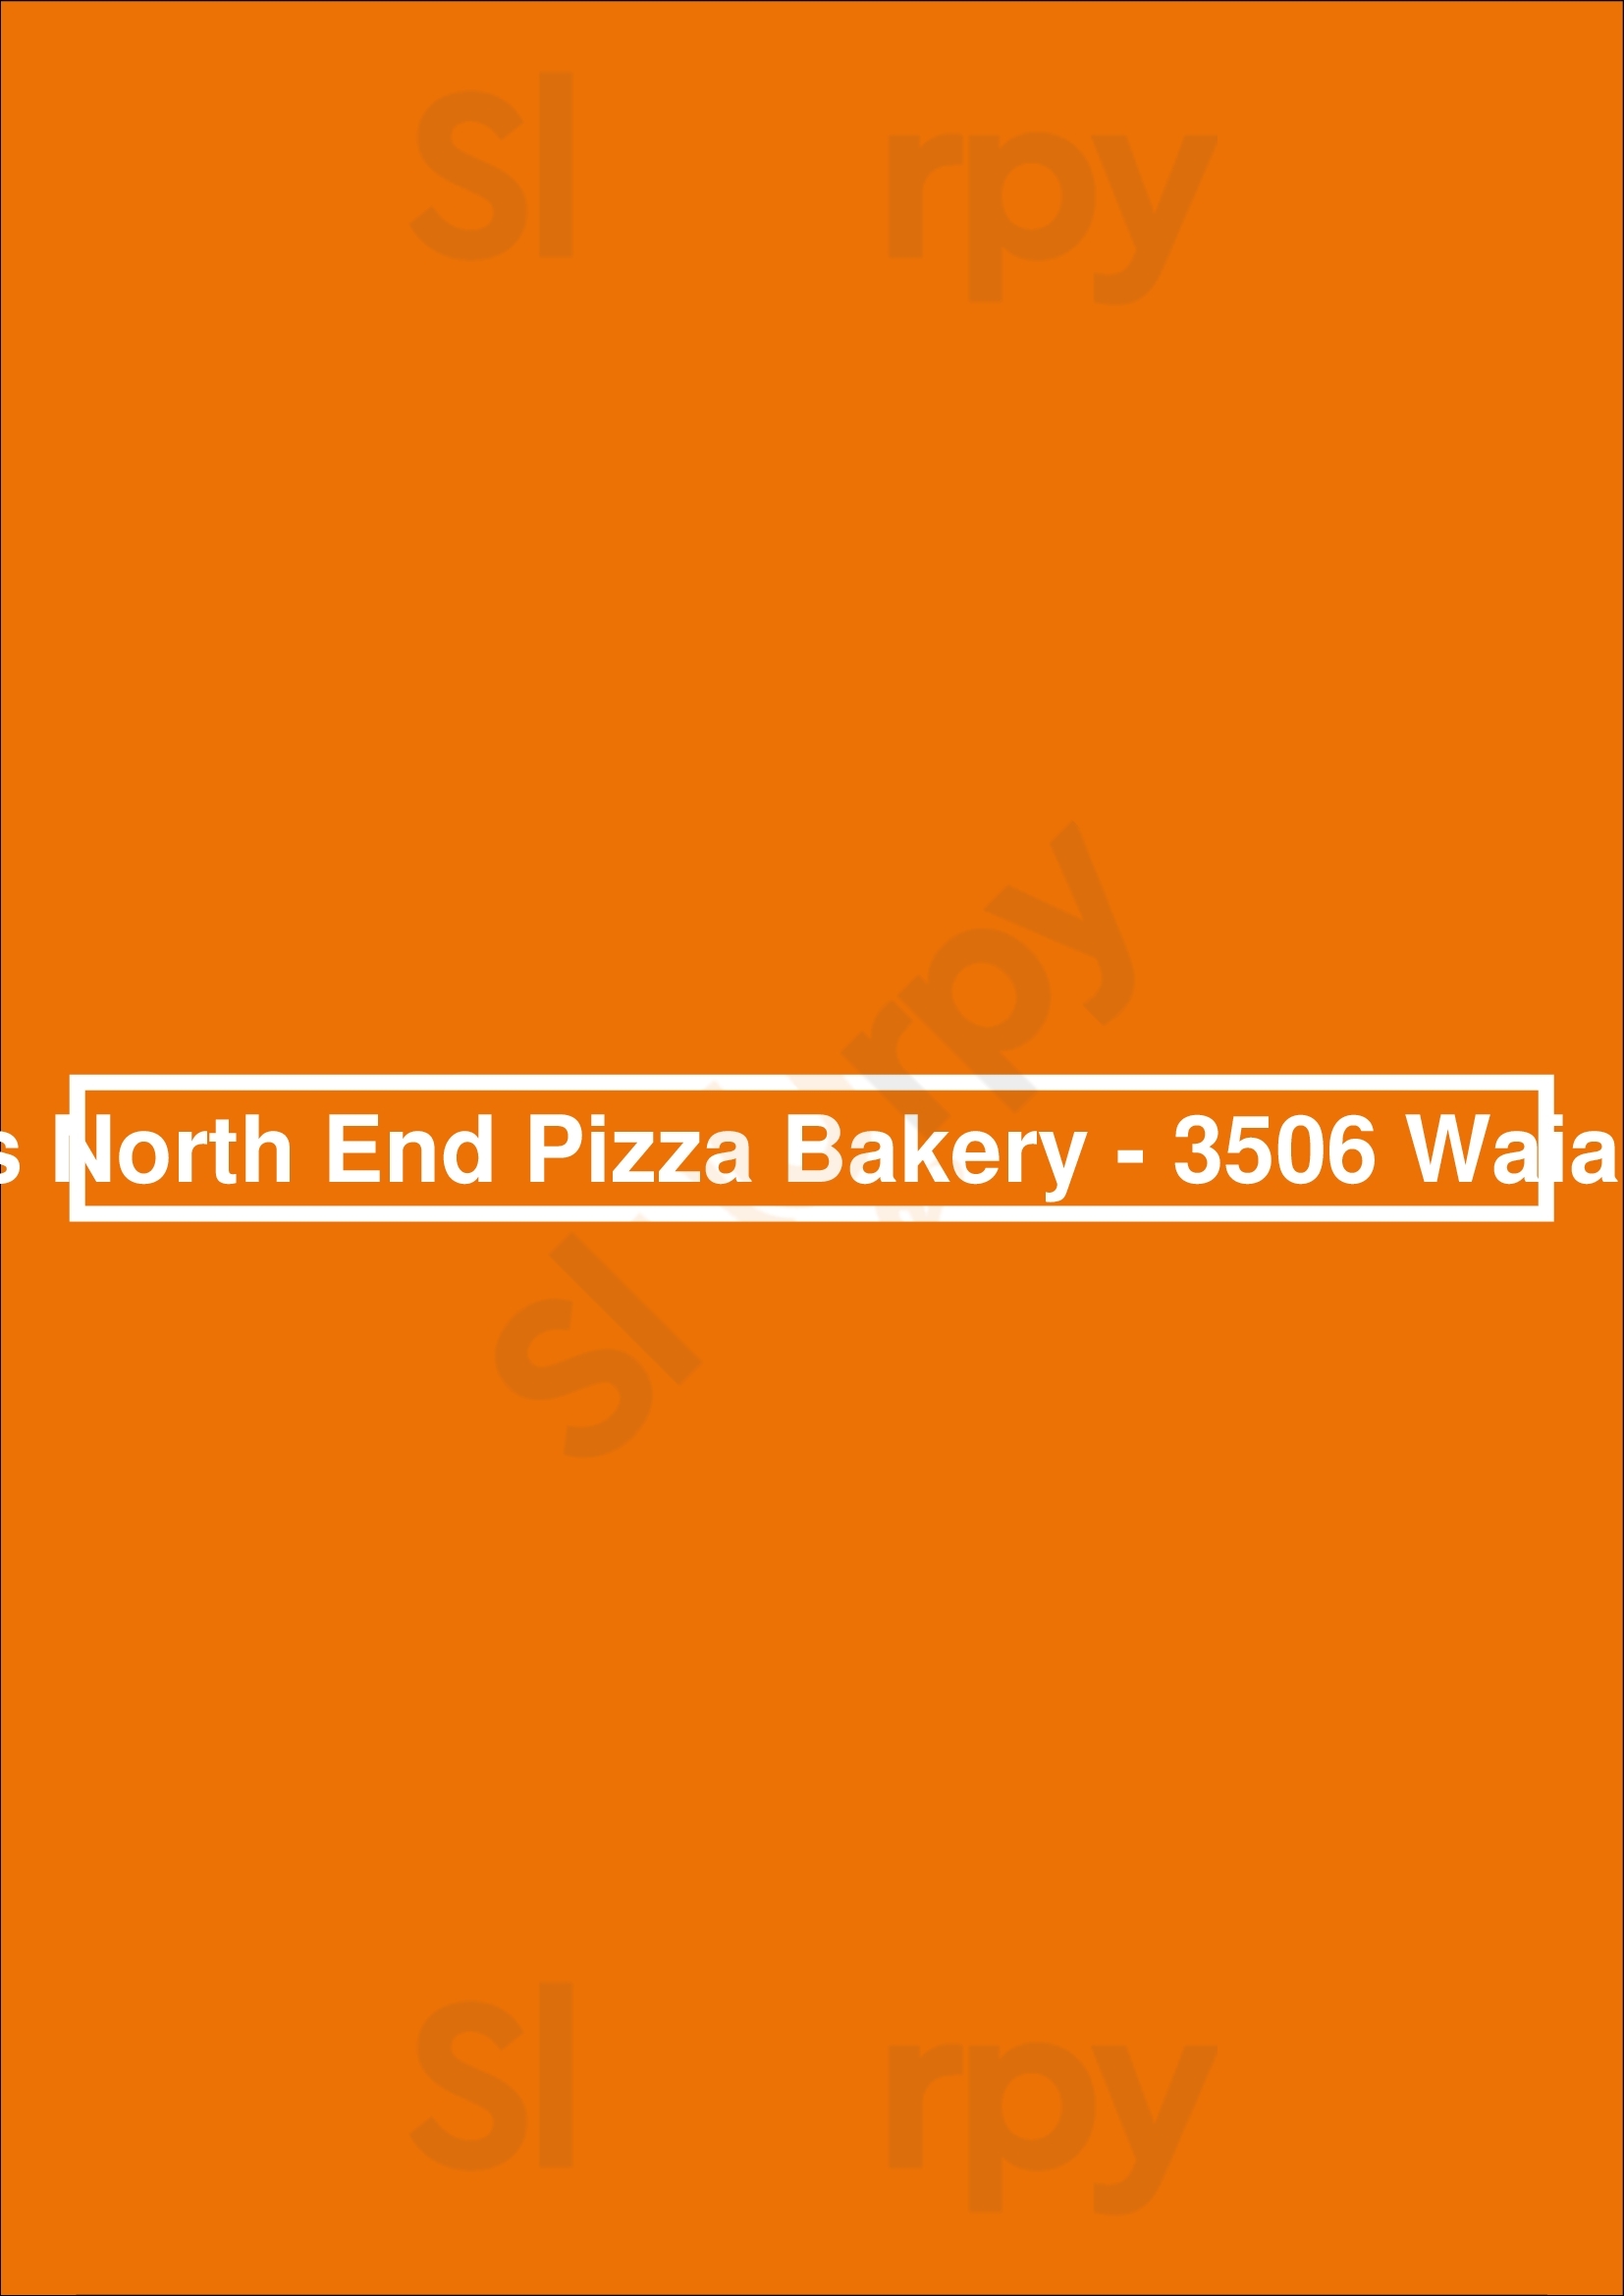 Bostons North End Pizza Bakery - 3506 Waialae Ave. Honolulu Menu - 1